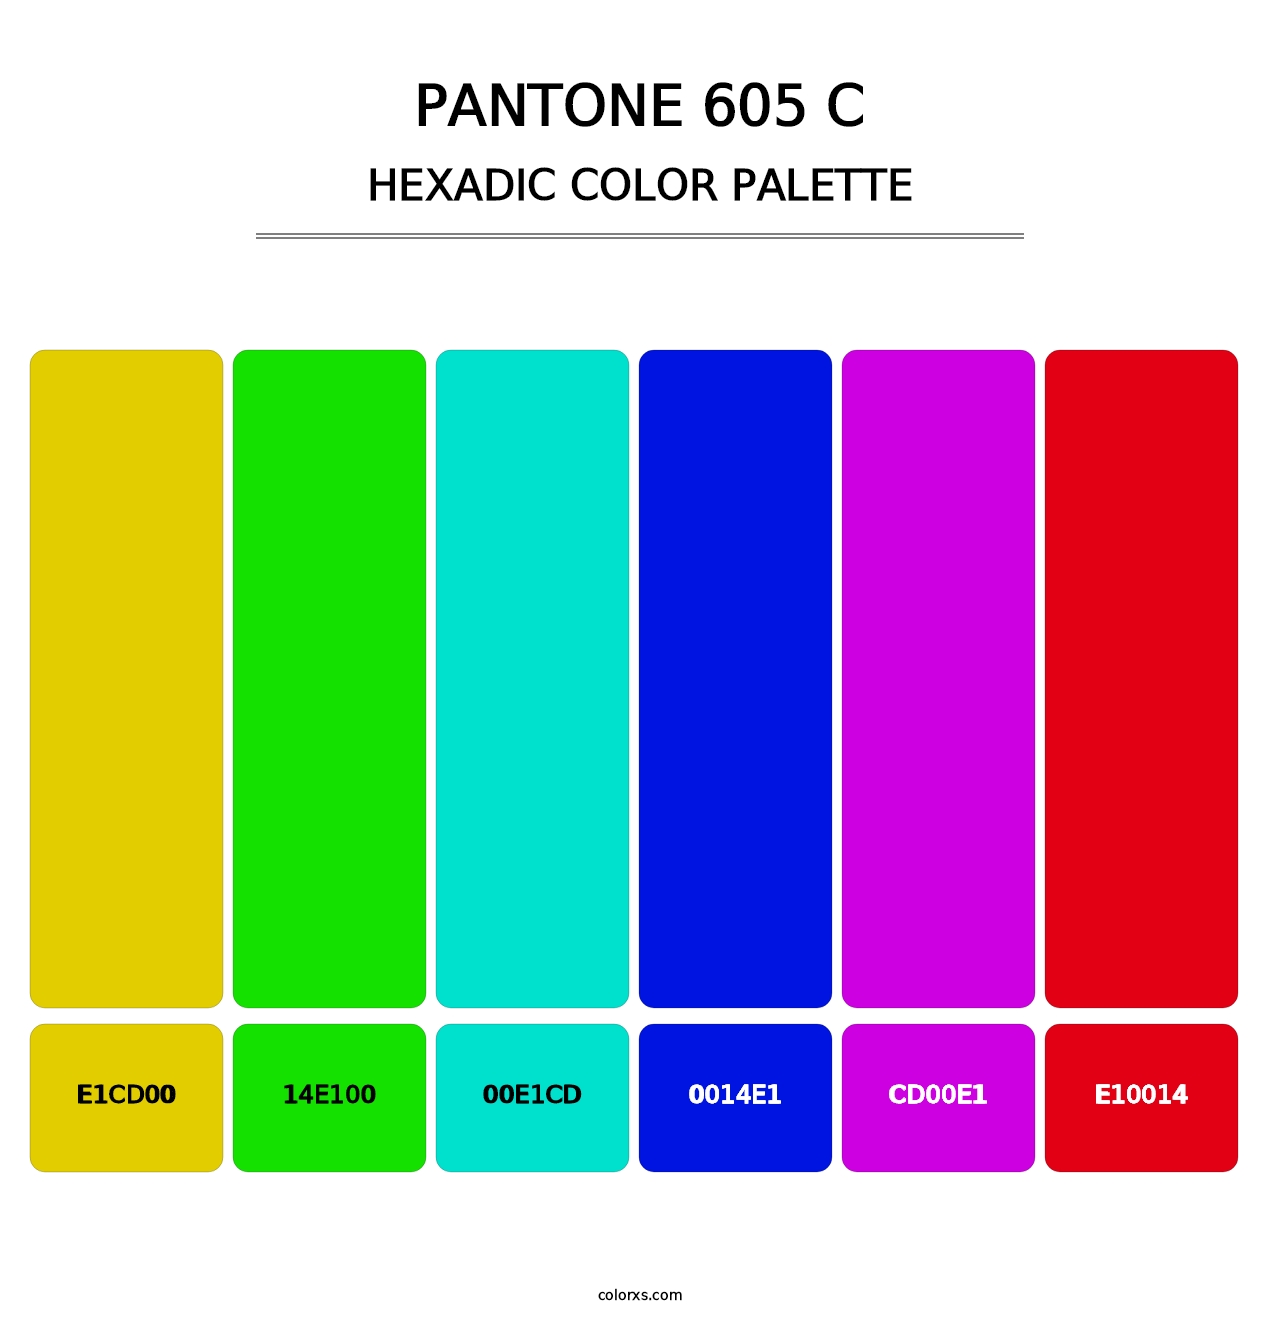 PANTONE 605 C - Hexadic Color Palette